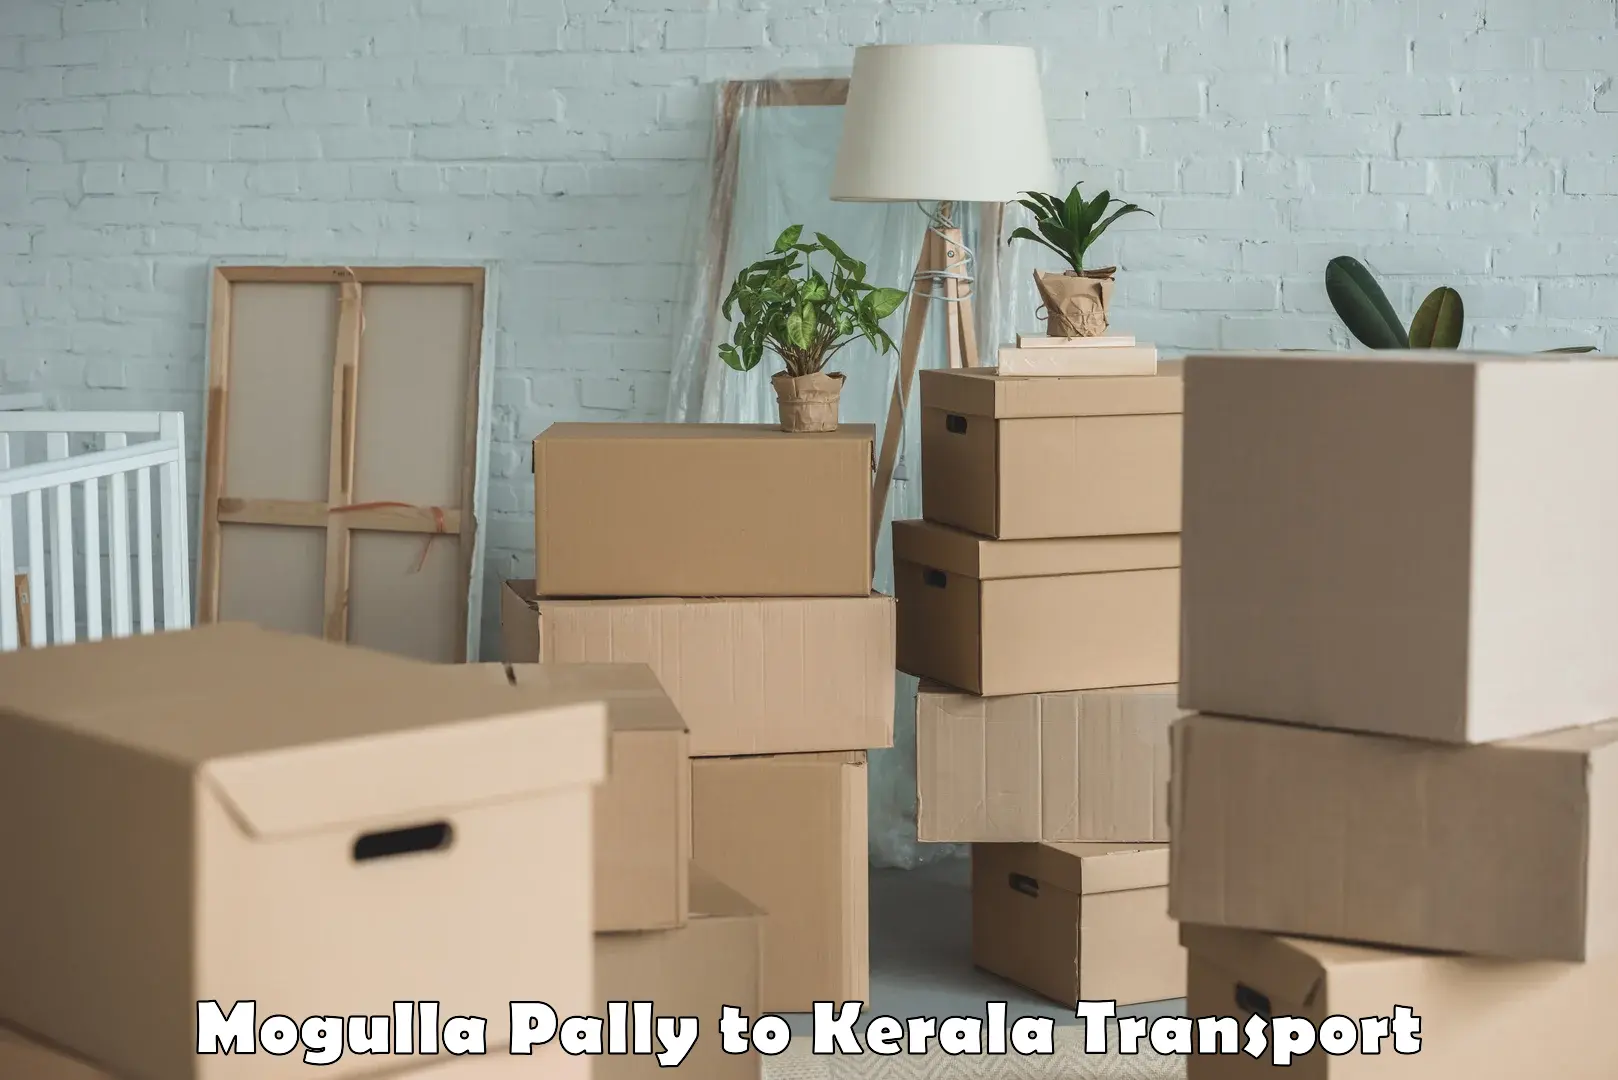 Daily parcel service transport Mogulla Pally to Cheemeni